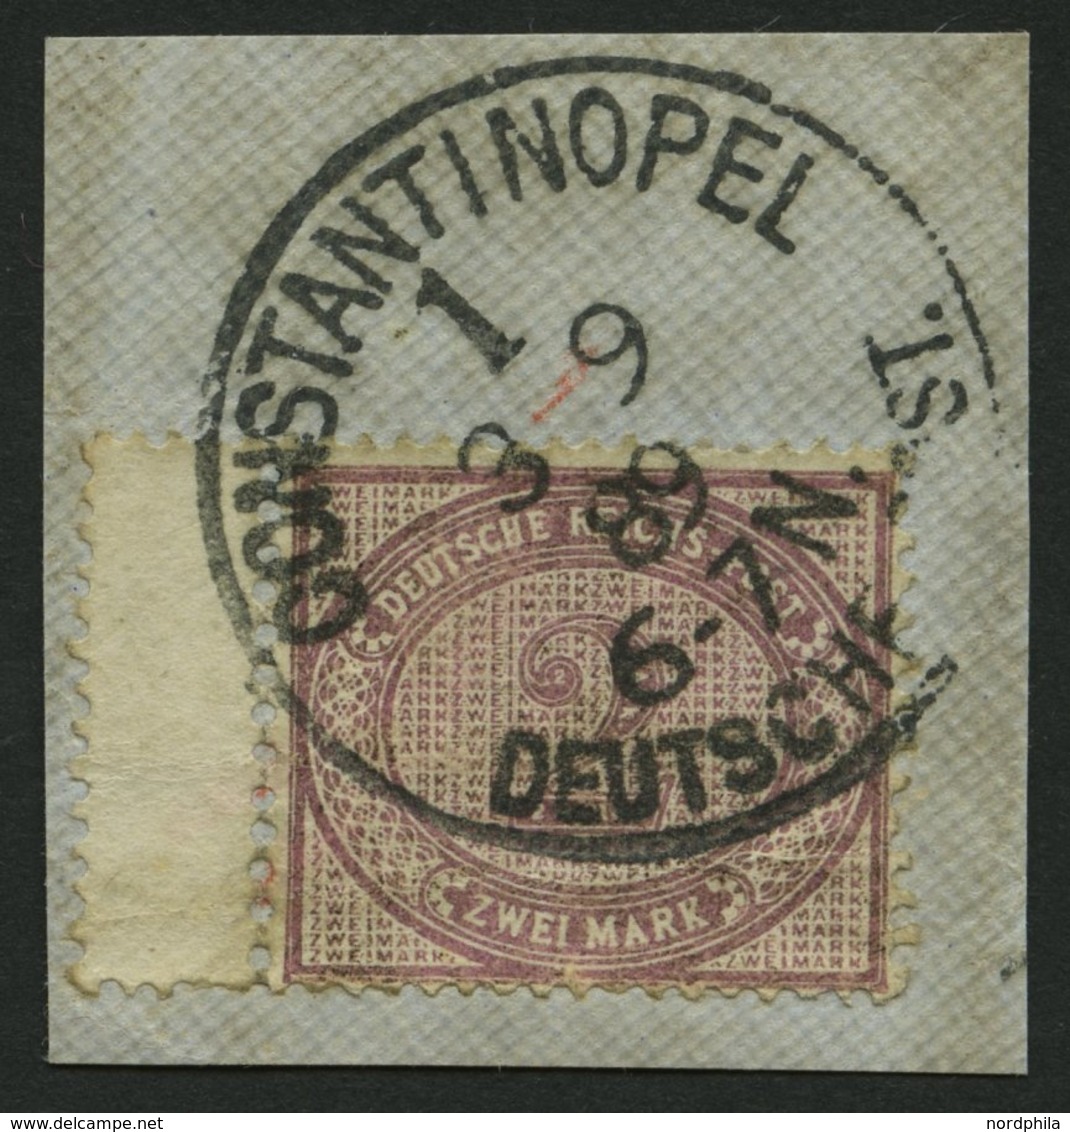 DP TÜRKEI V 37d BrfStk, 1889, 2 M. Lebhaftgraulila, Links Mit Anhängendem Steg, Stempel CONSTANTINOPEL 1, Prachtbriefstü - Turquie (bureaux)